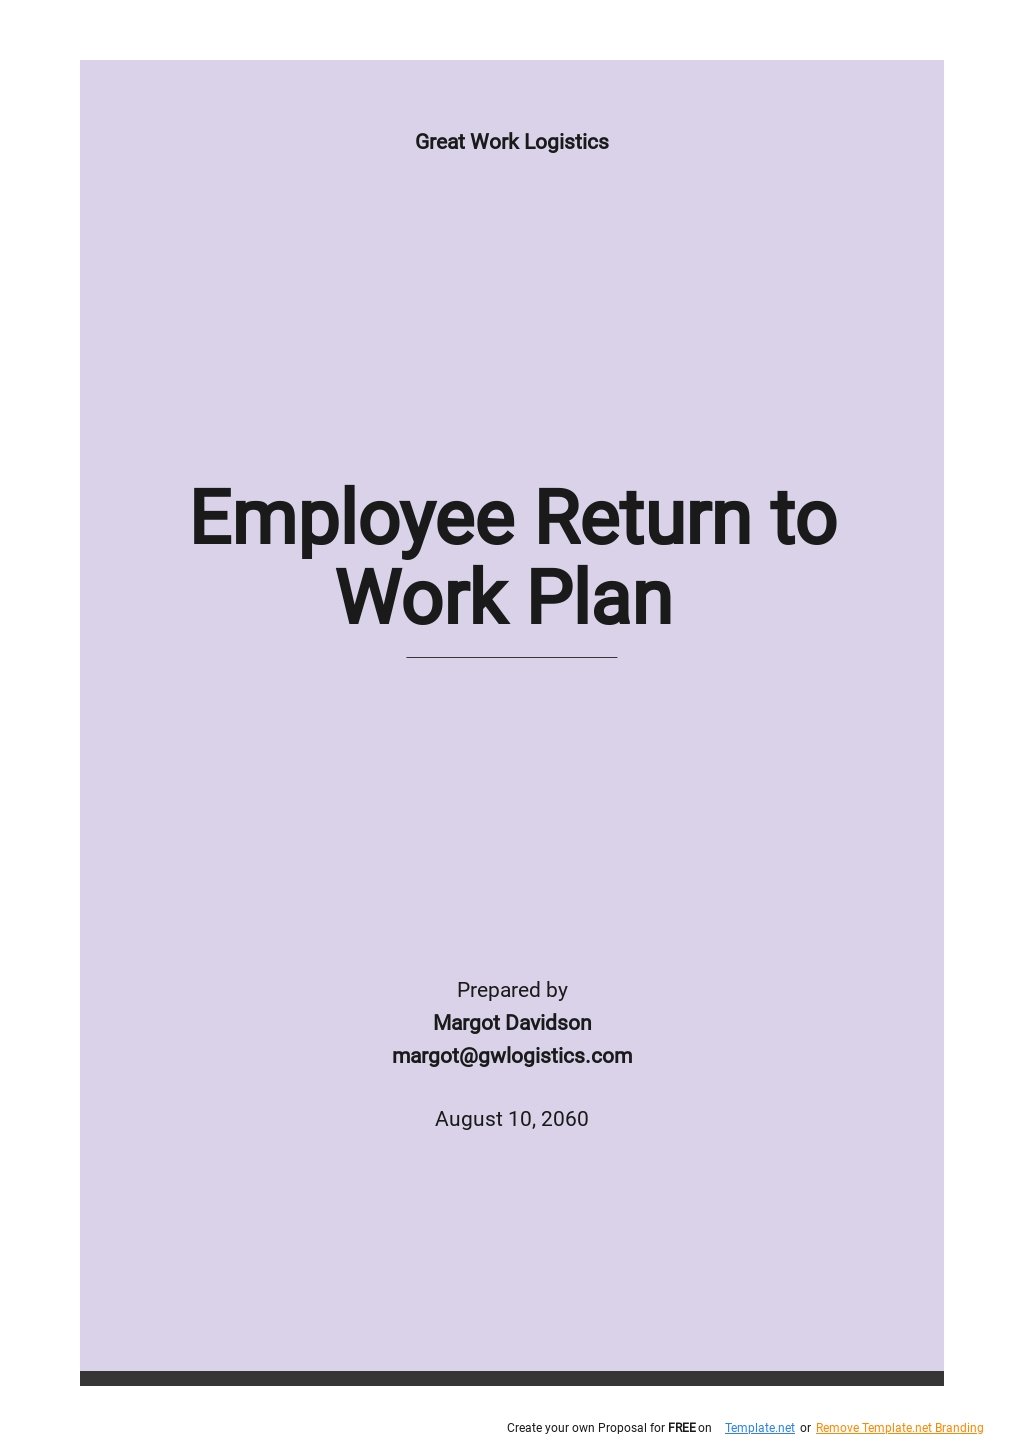 Employee Work Plan Template